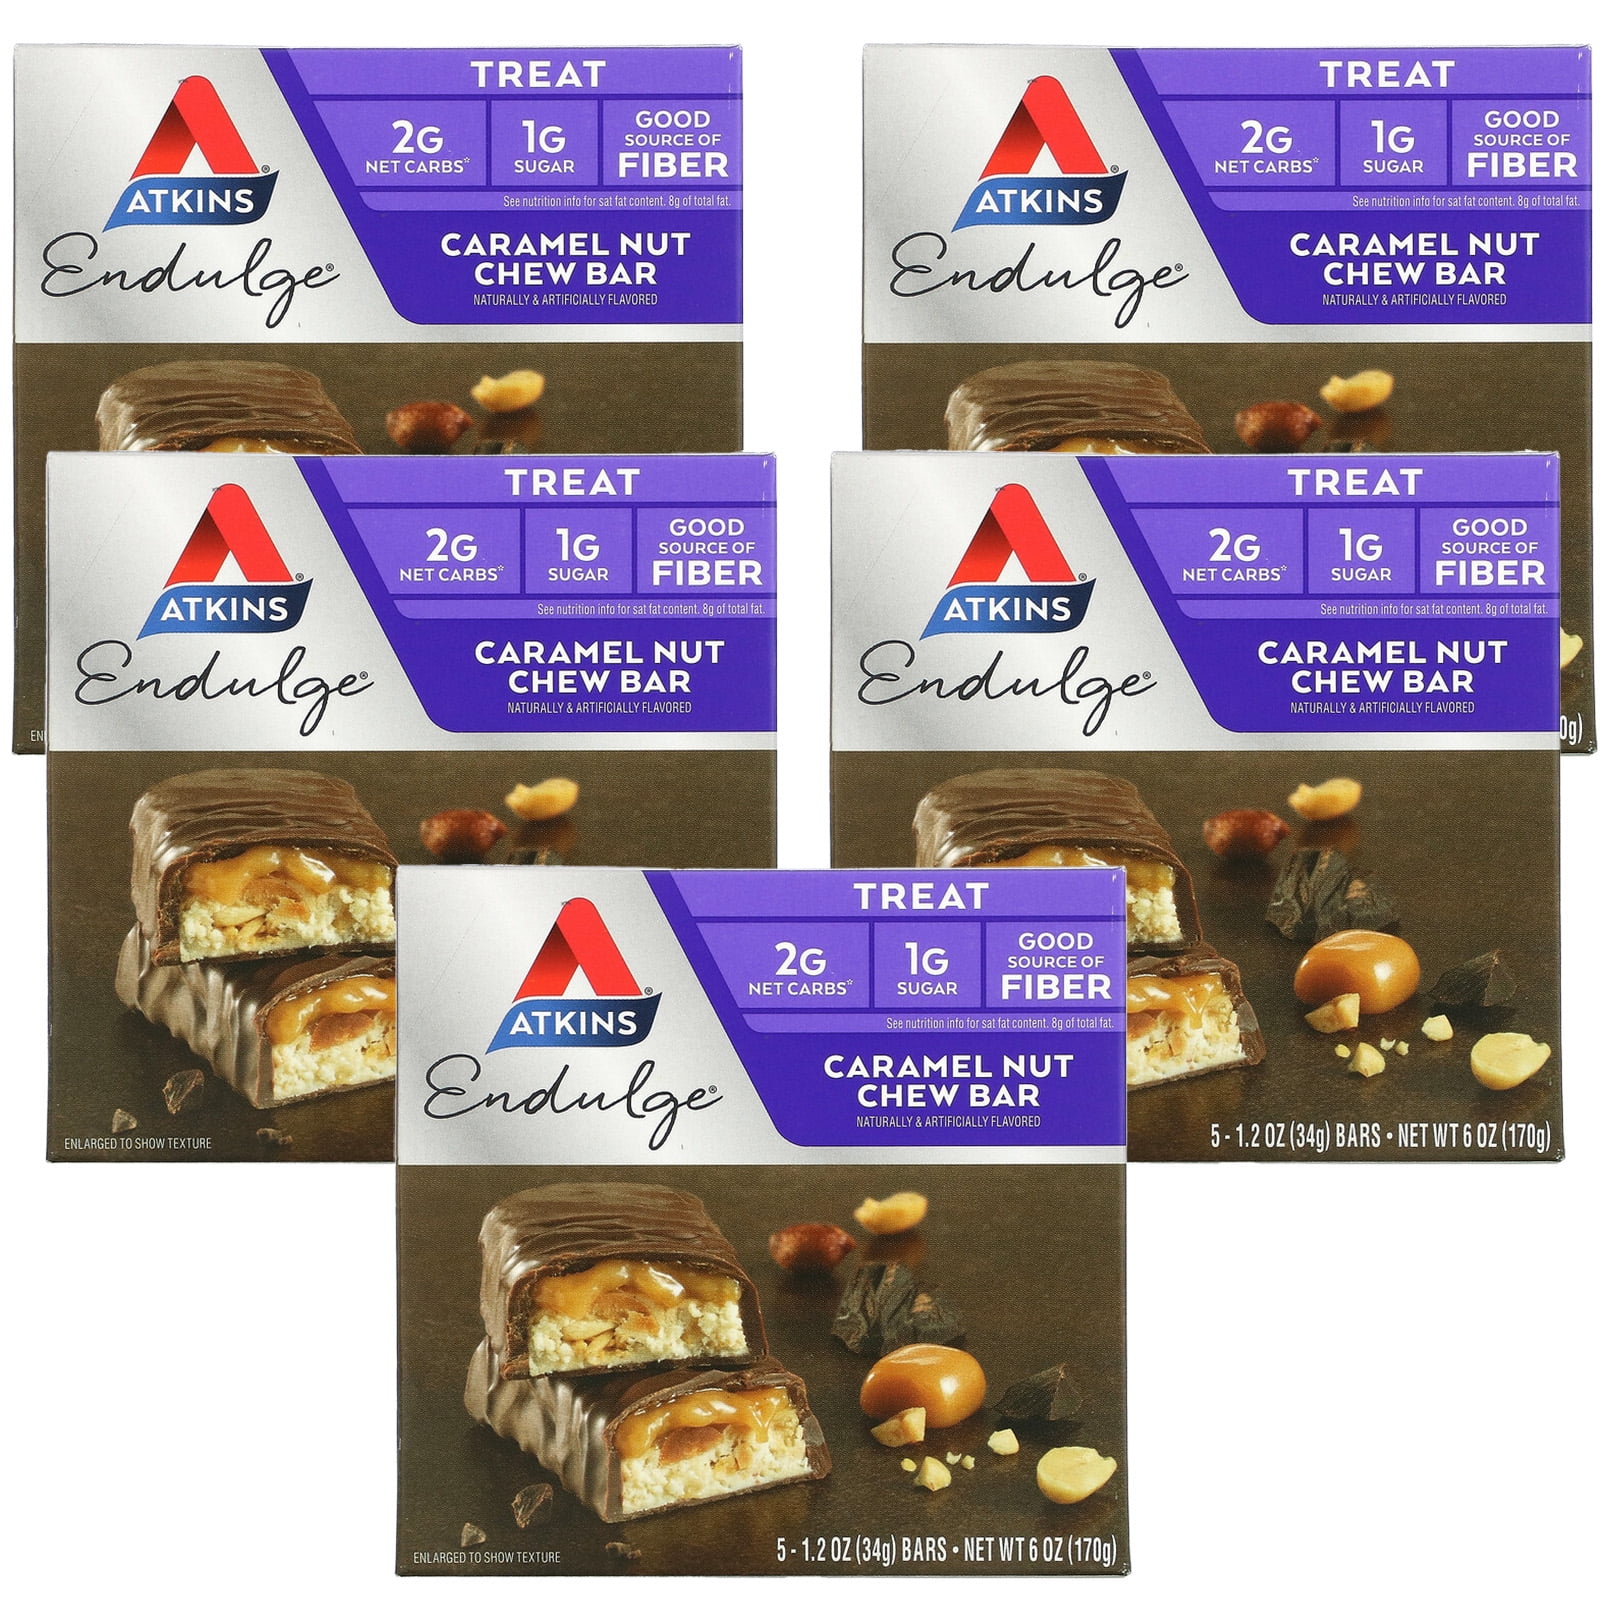 Atkins Endulge Caramel Nut Chew Bar, 1.2oz, 5-pack (Treat)